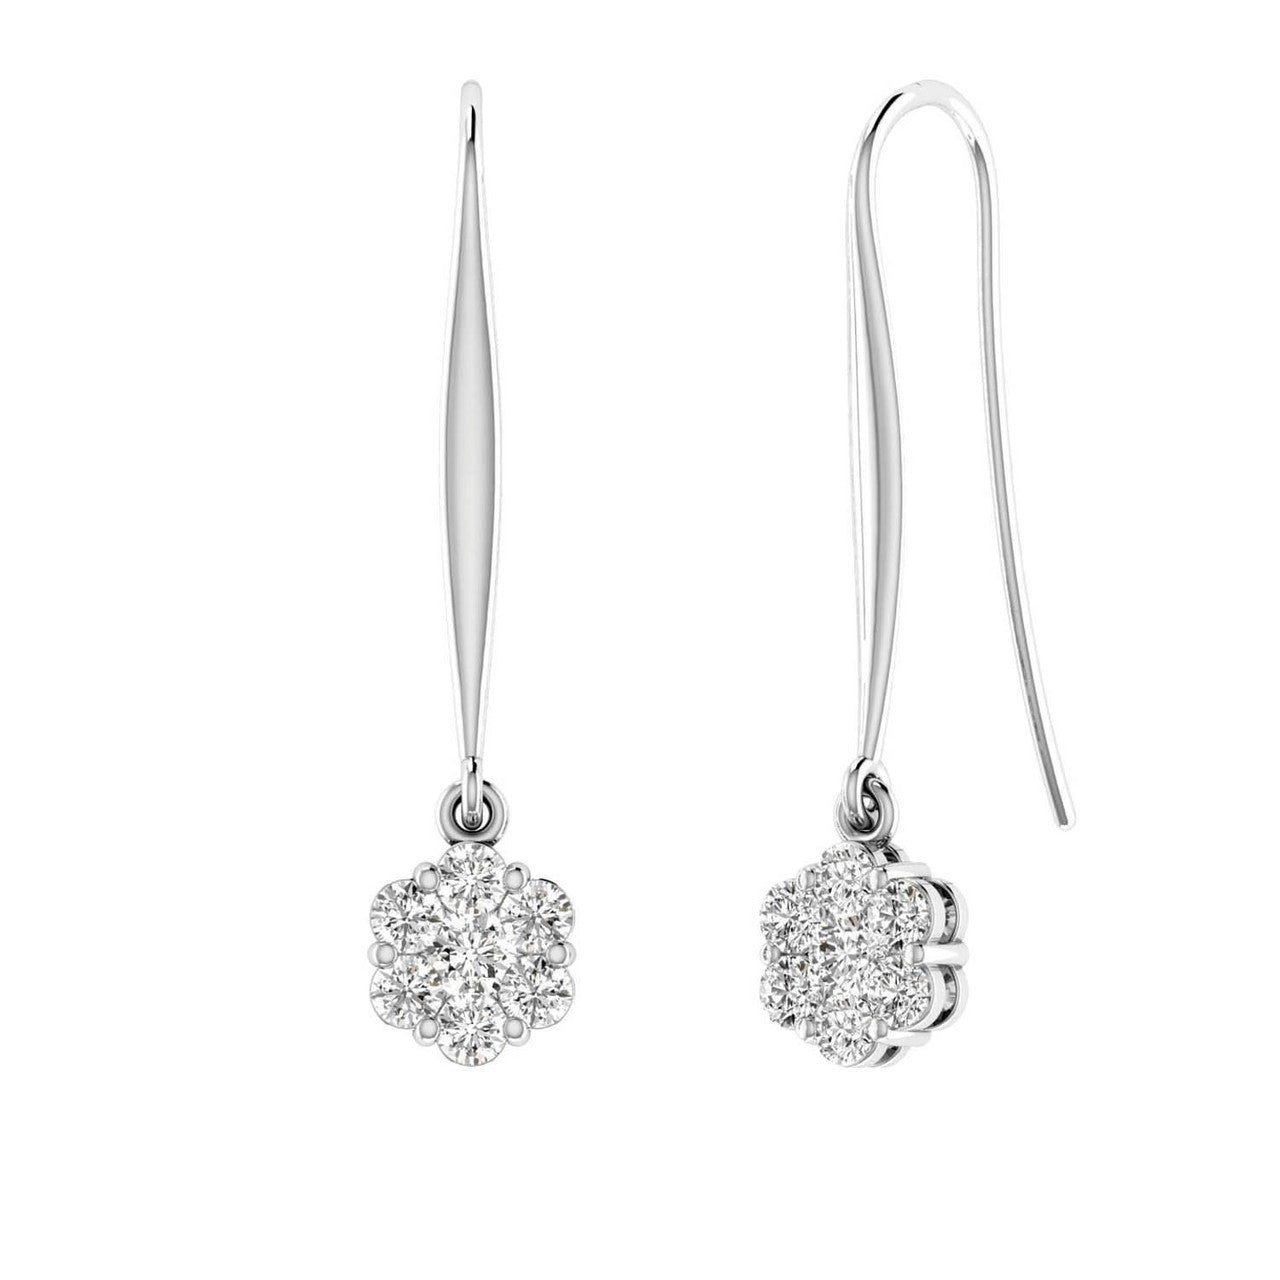 Ice Jewellery Cluster Hook Diamond Earrings with 0.50ct Diamonds in 9K White Gold - 9WSH50GH | Ice Jewellery Australia